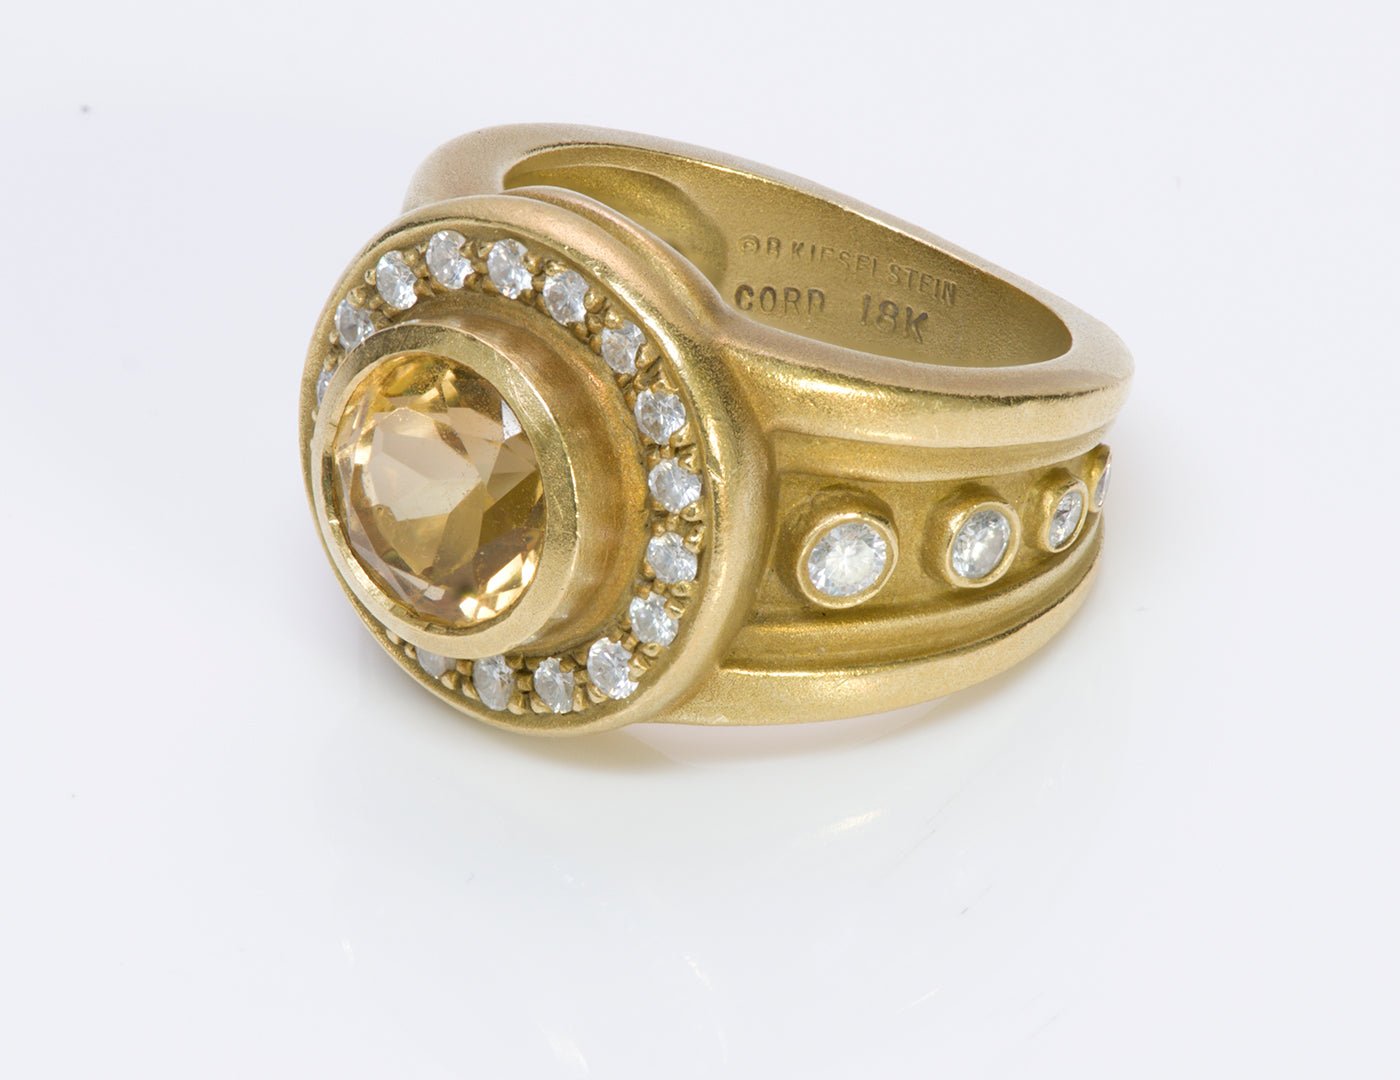 Barry Kieselstein Cord 18K Gold Citrine Diamond Ring - DSF Antique Jewelry